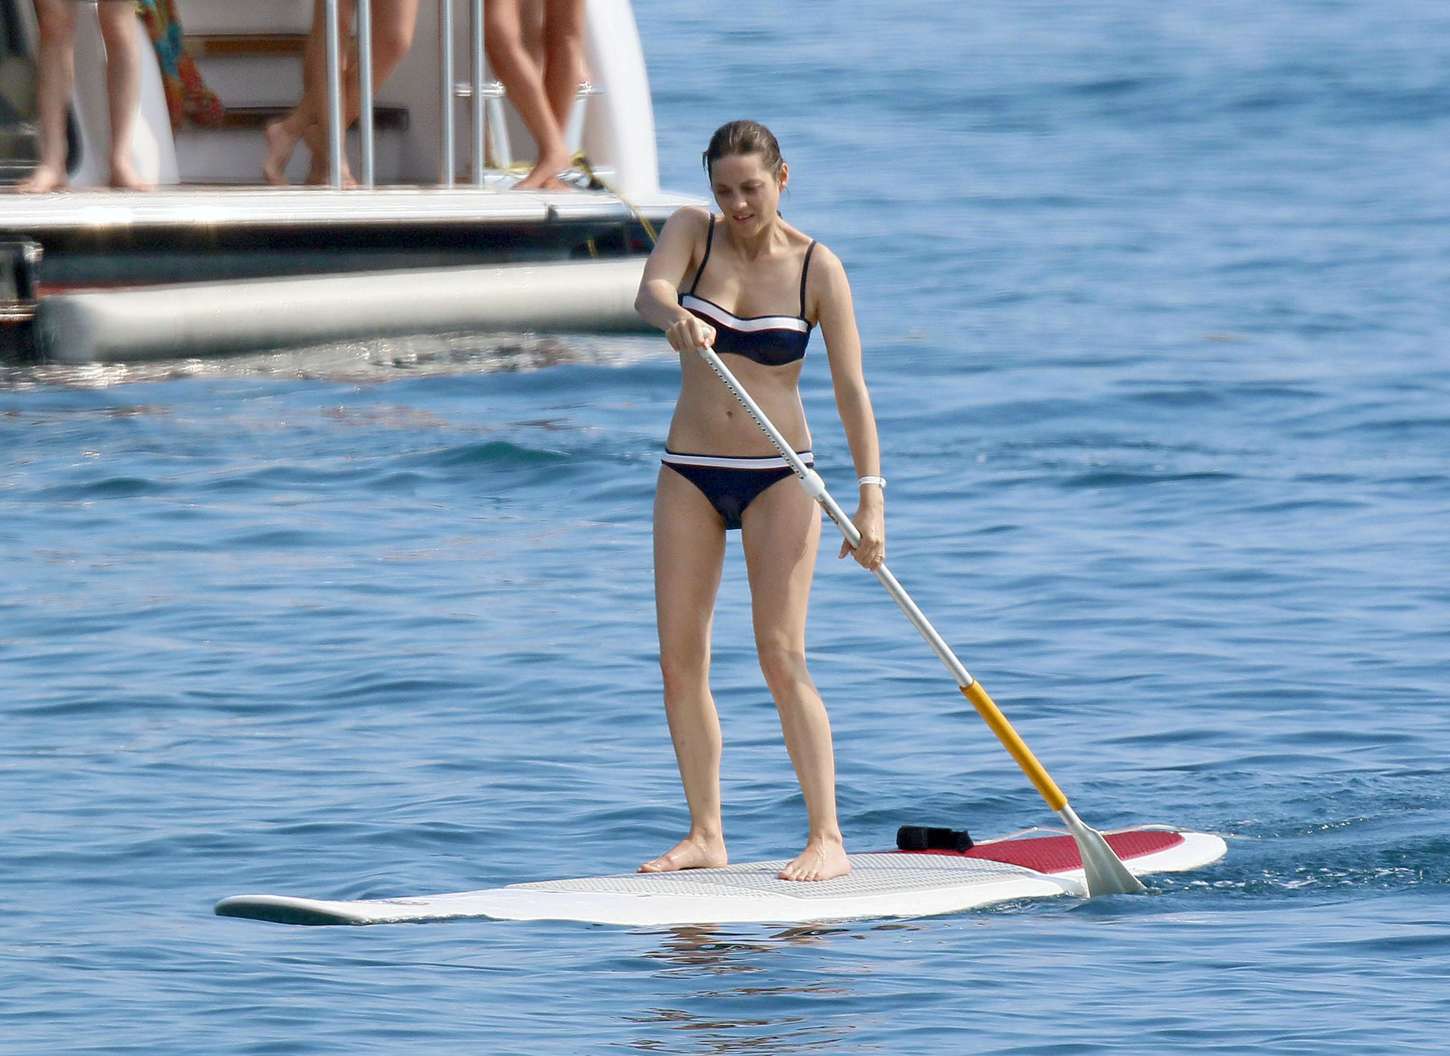 Marion Cotillard in Bikini Paddleboarding. 